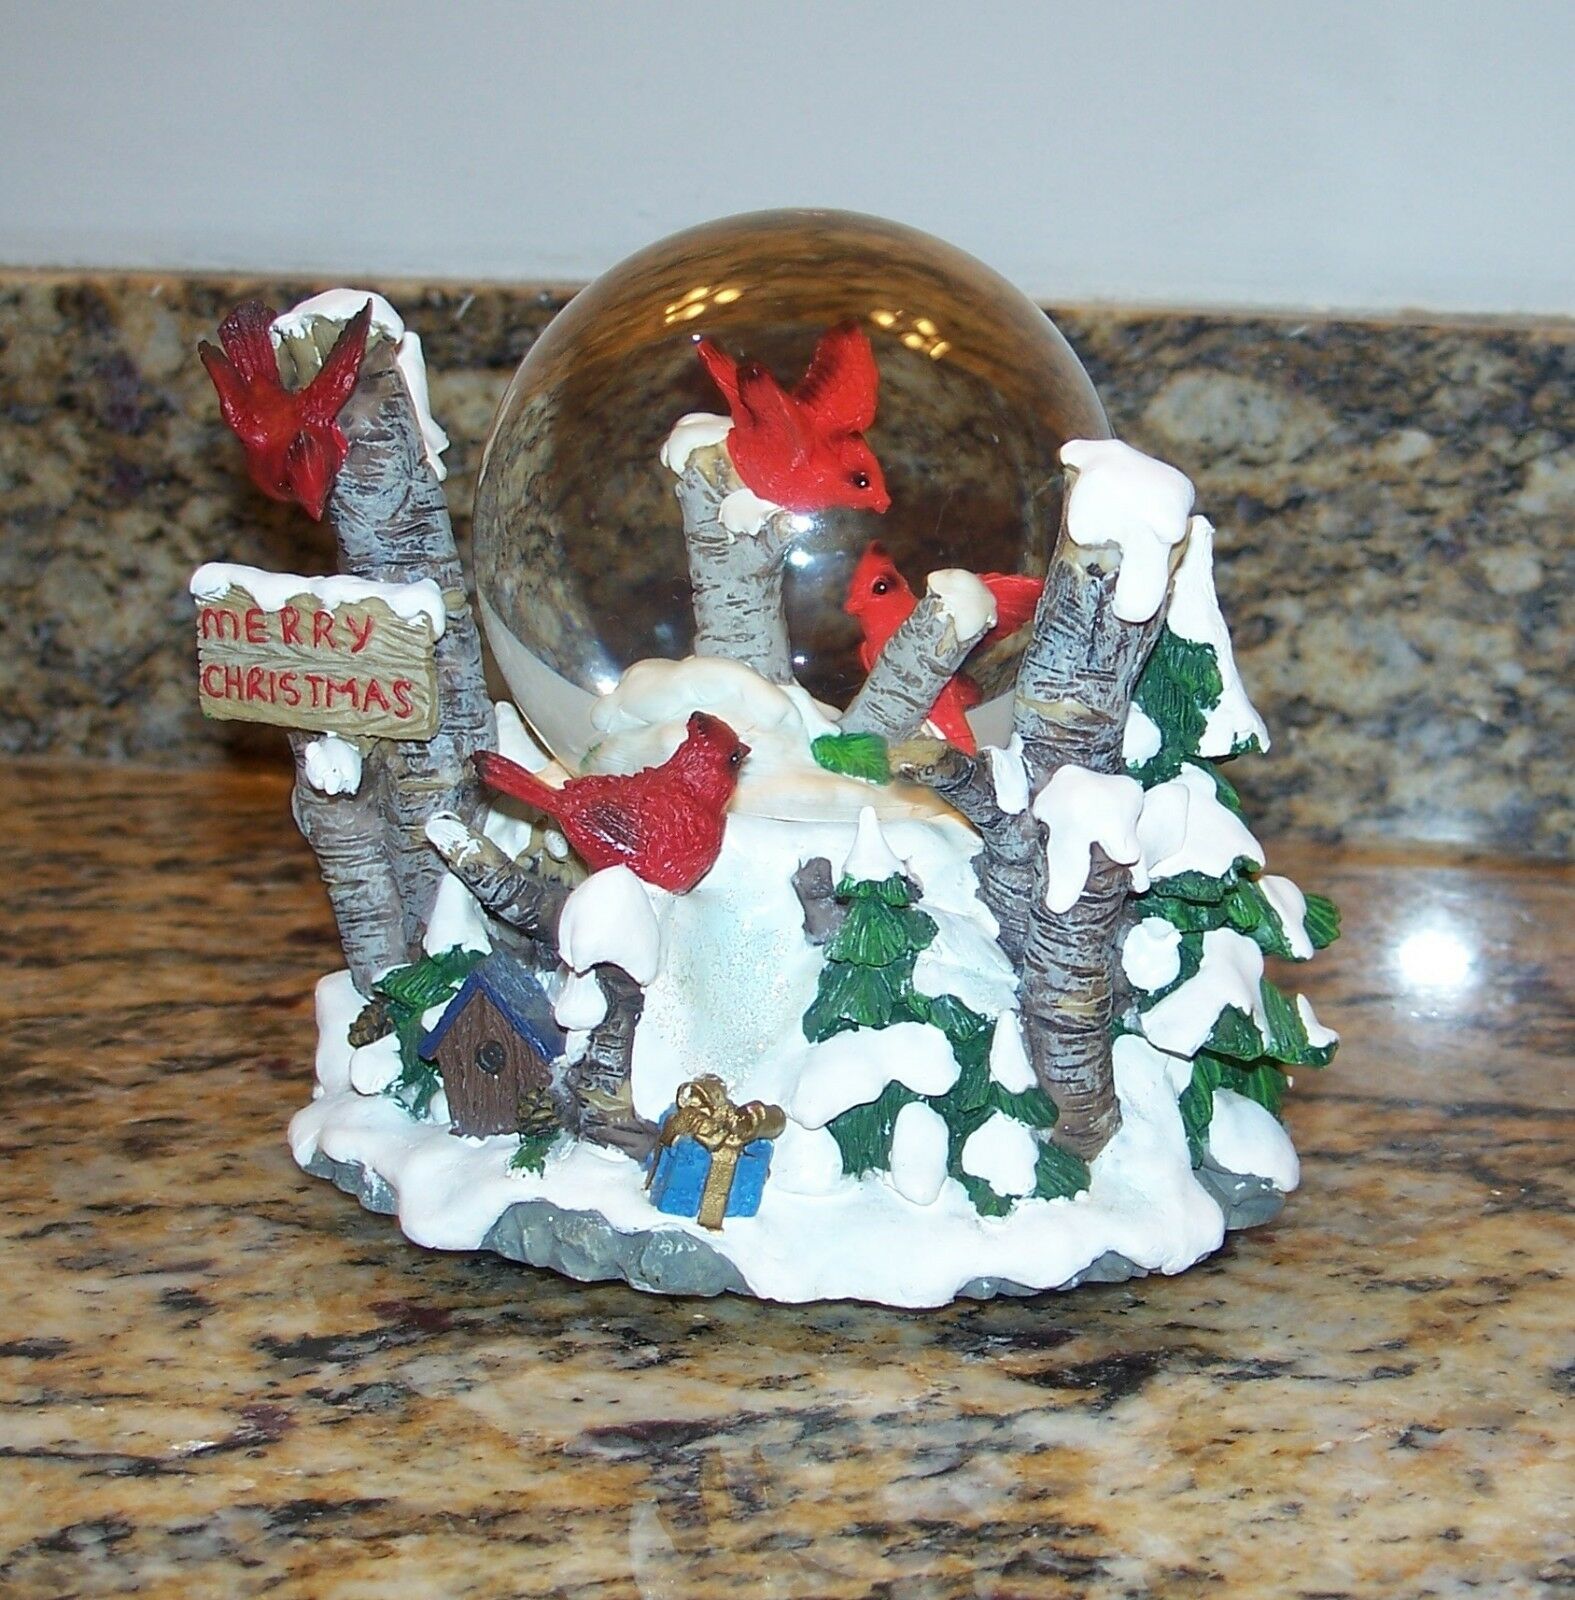 4 Red Cardinals In Birch Trees Musical Christmas Snow Globe Winter Scene Diorama